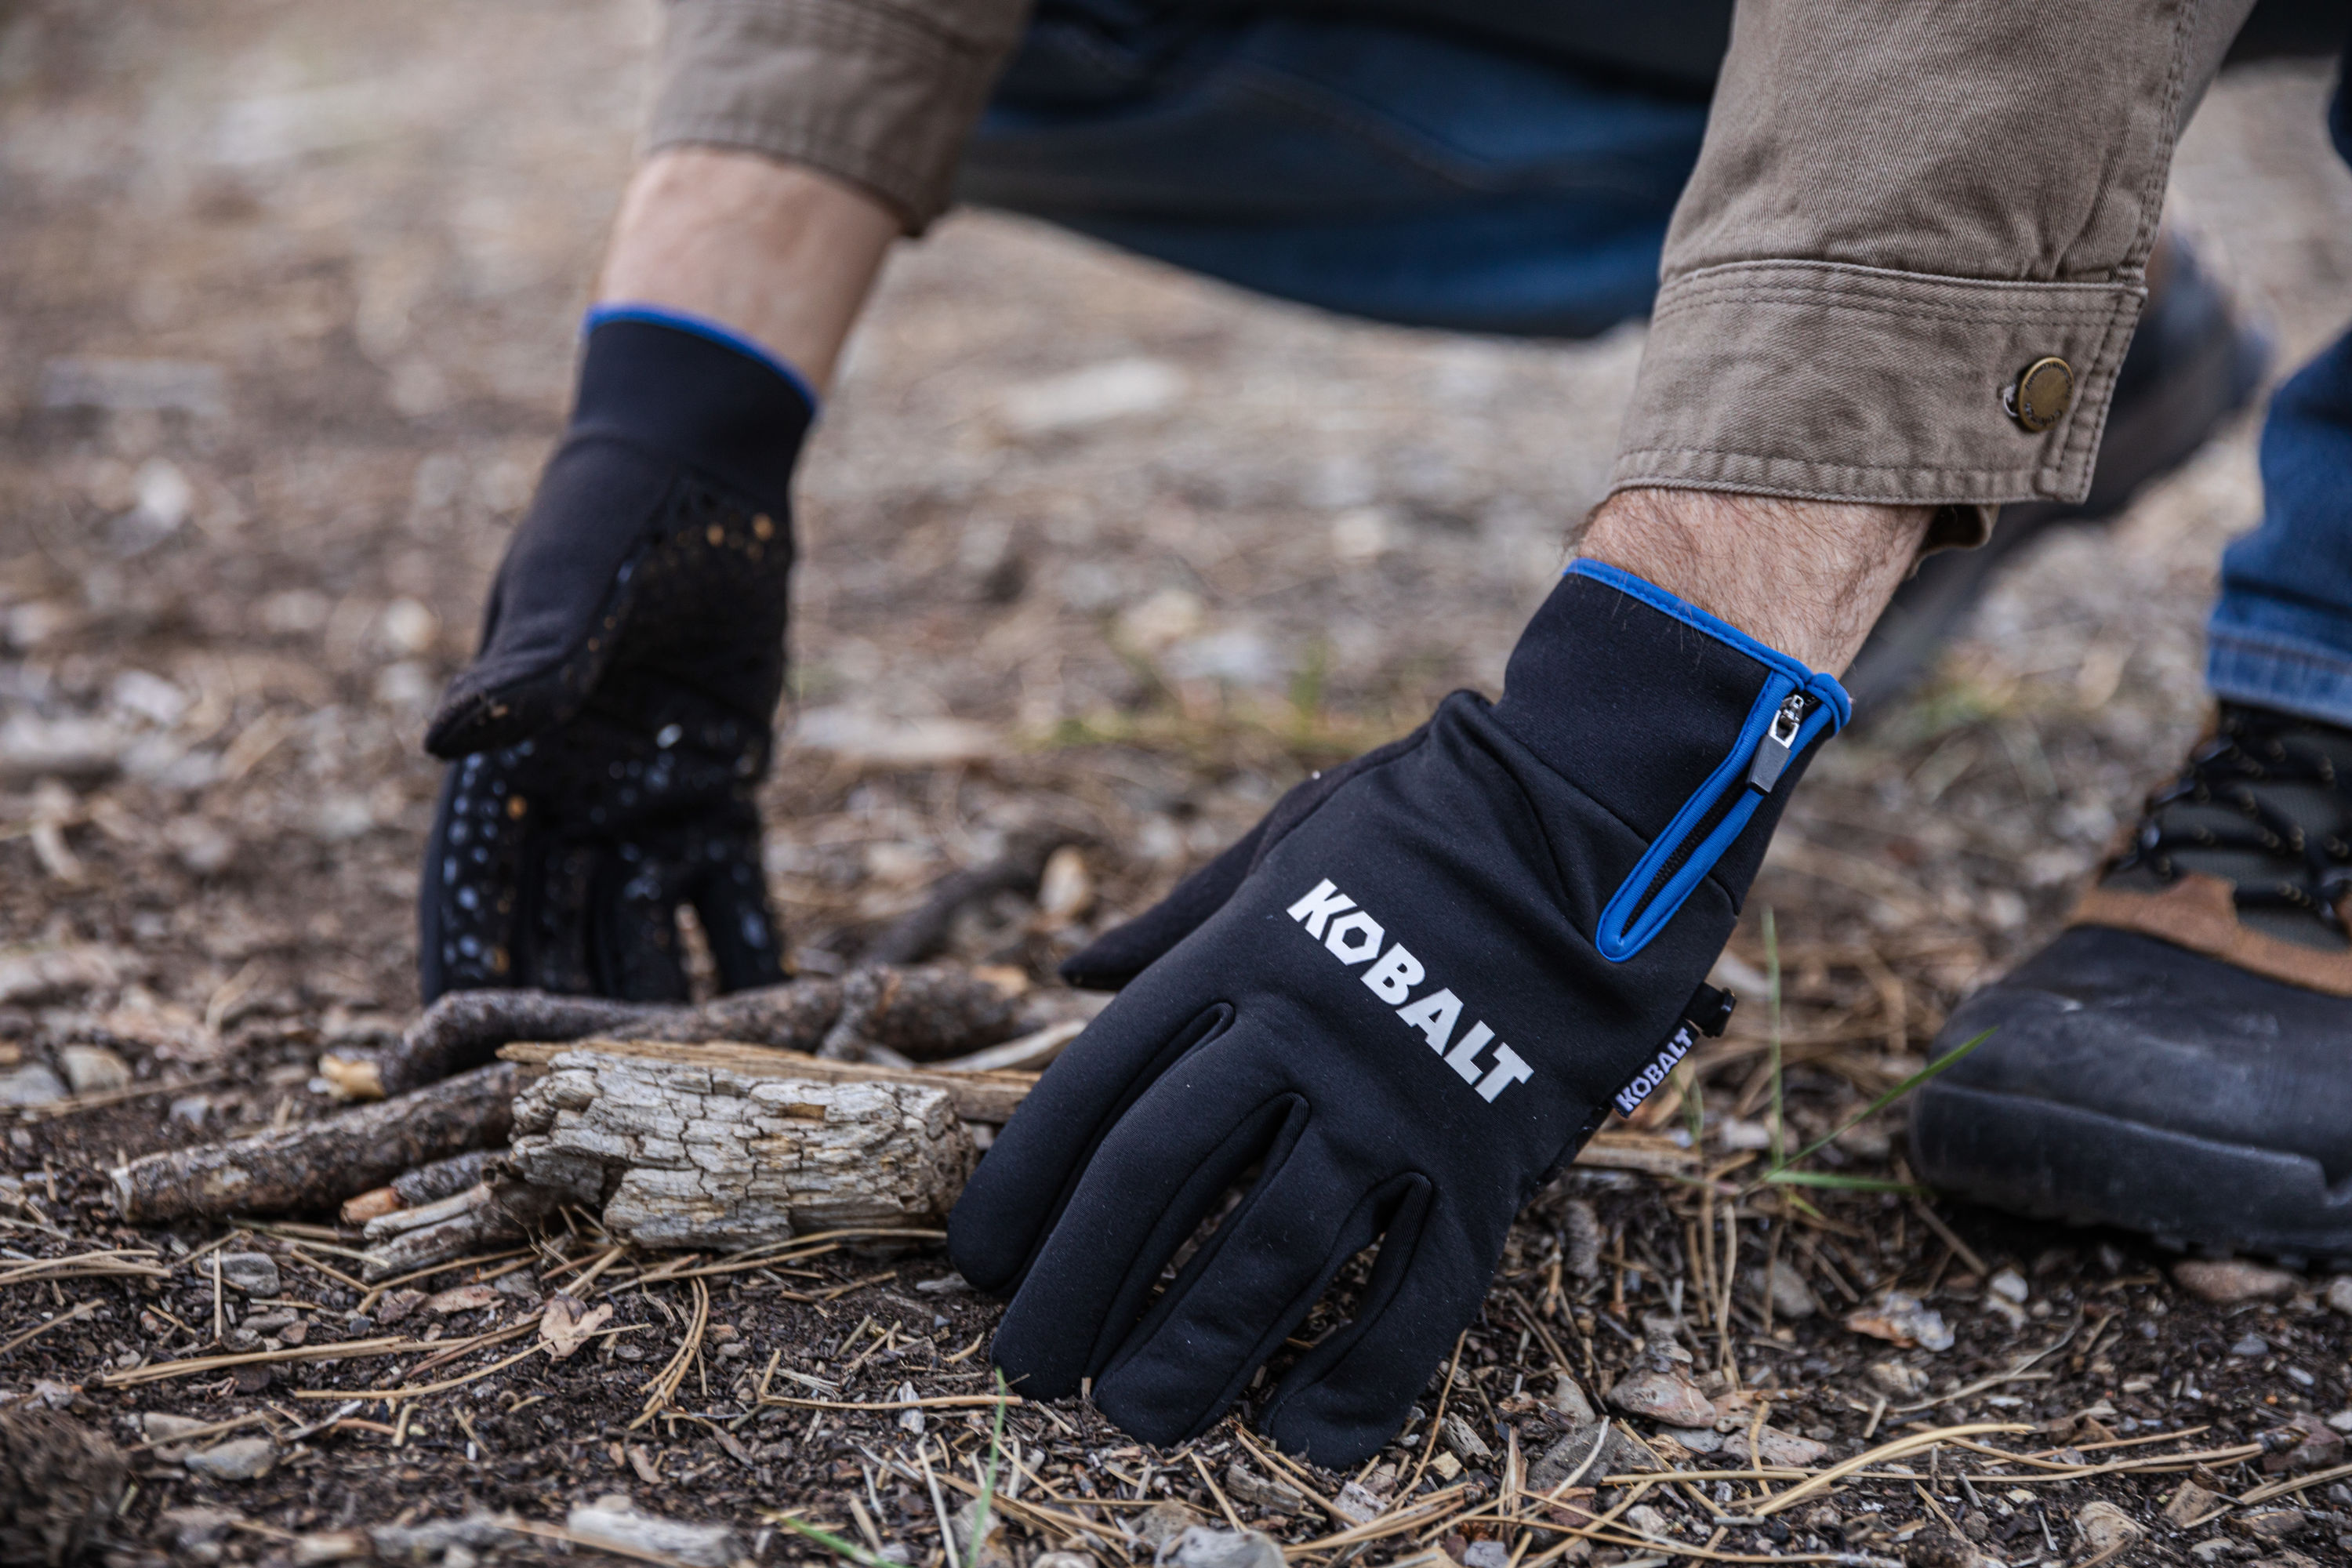 Kobalt 3D Knit Work Glove - L - L (Large)